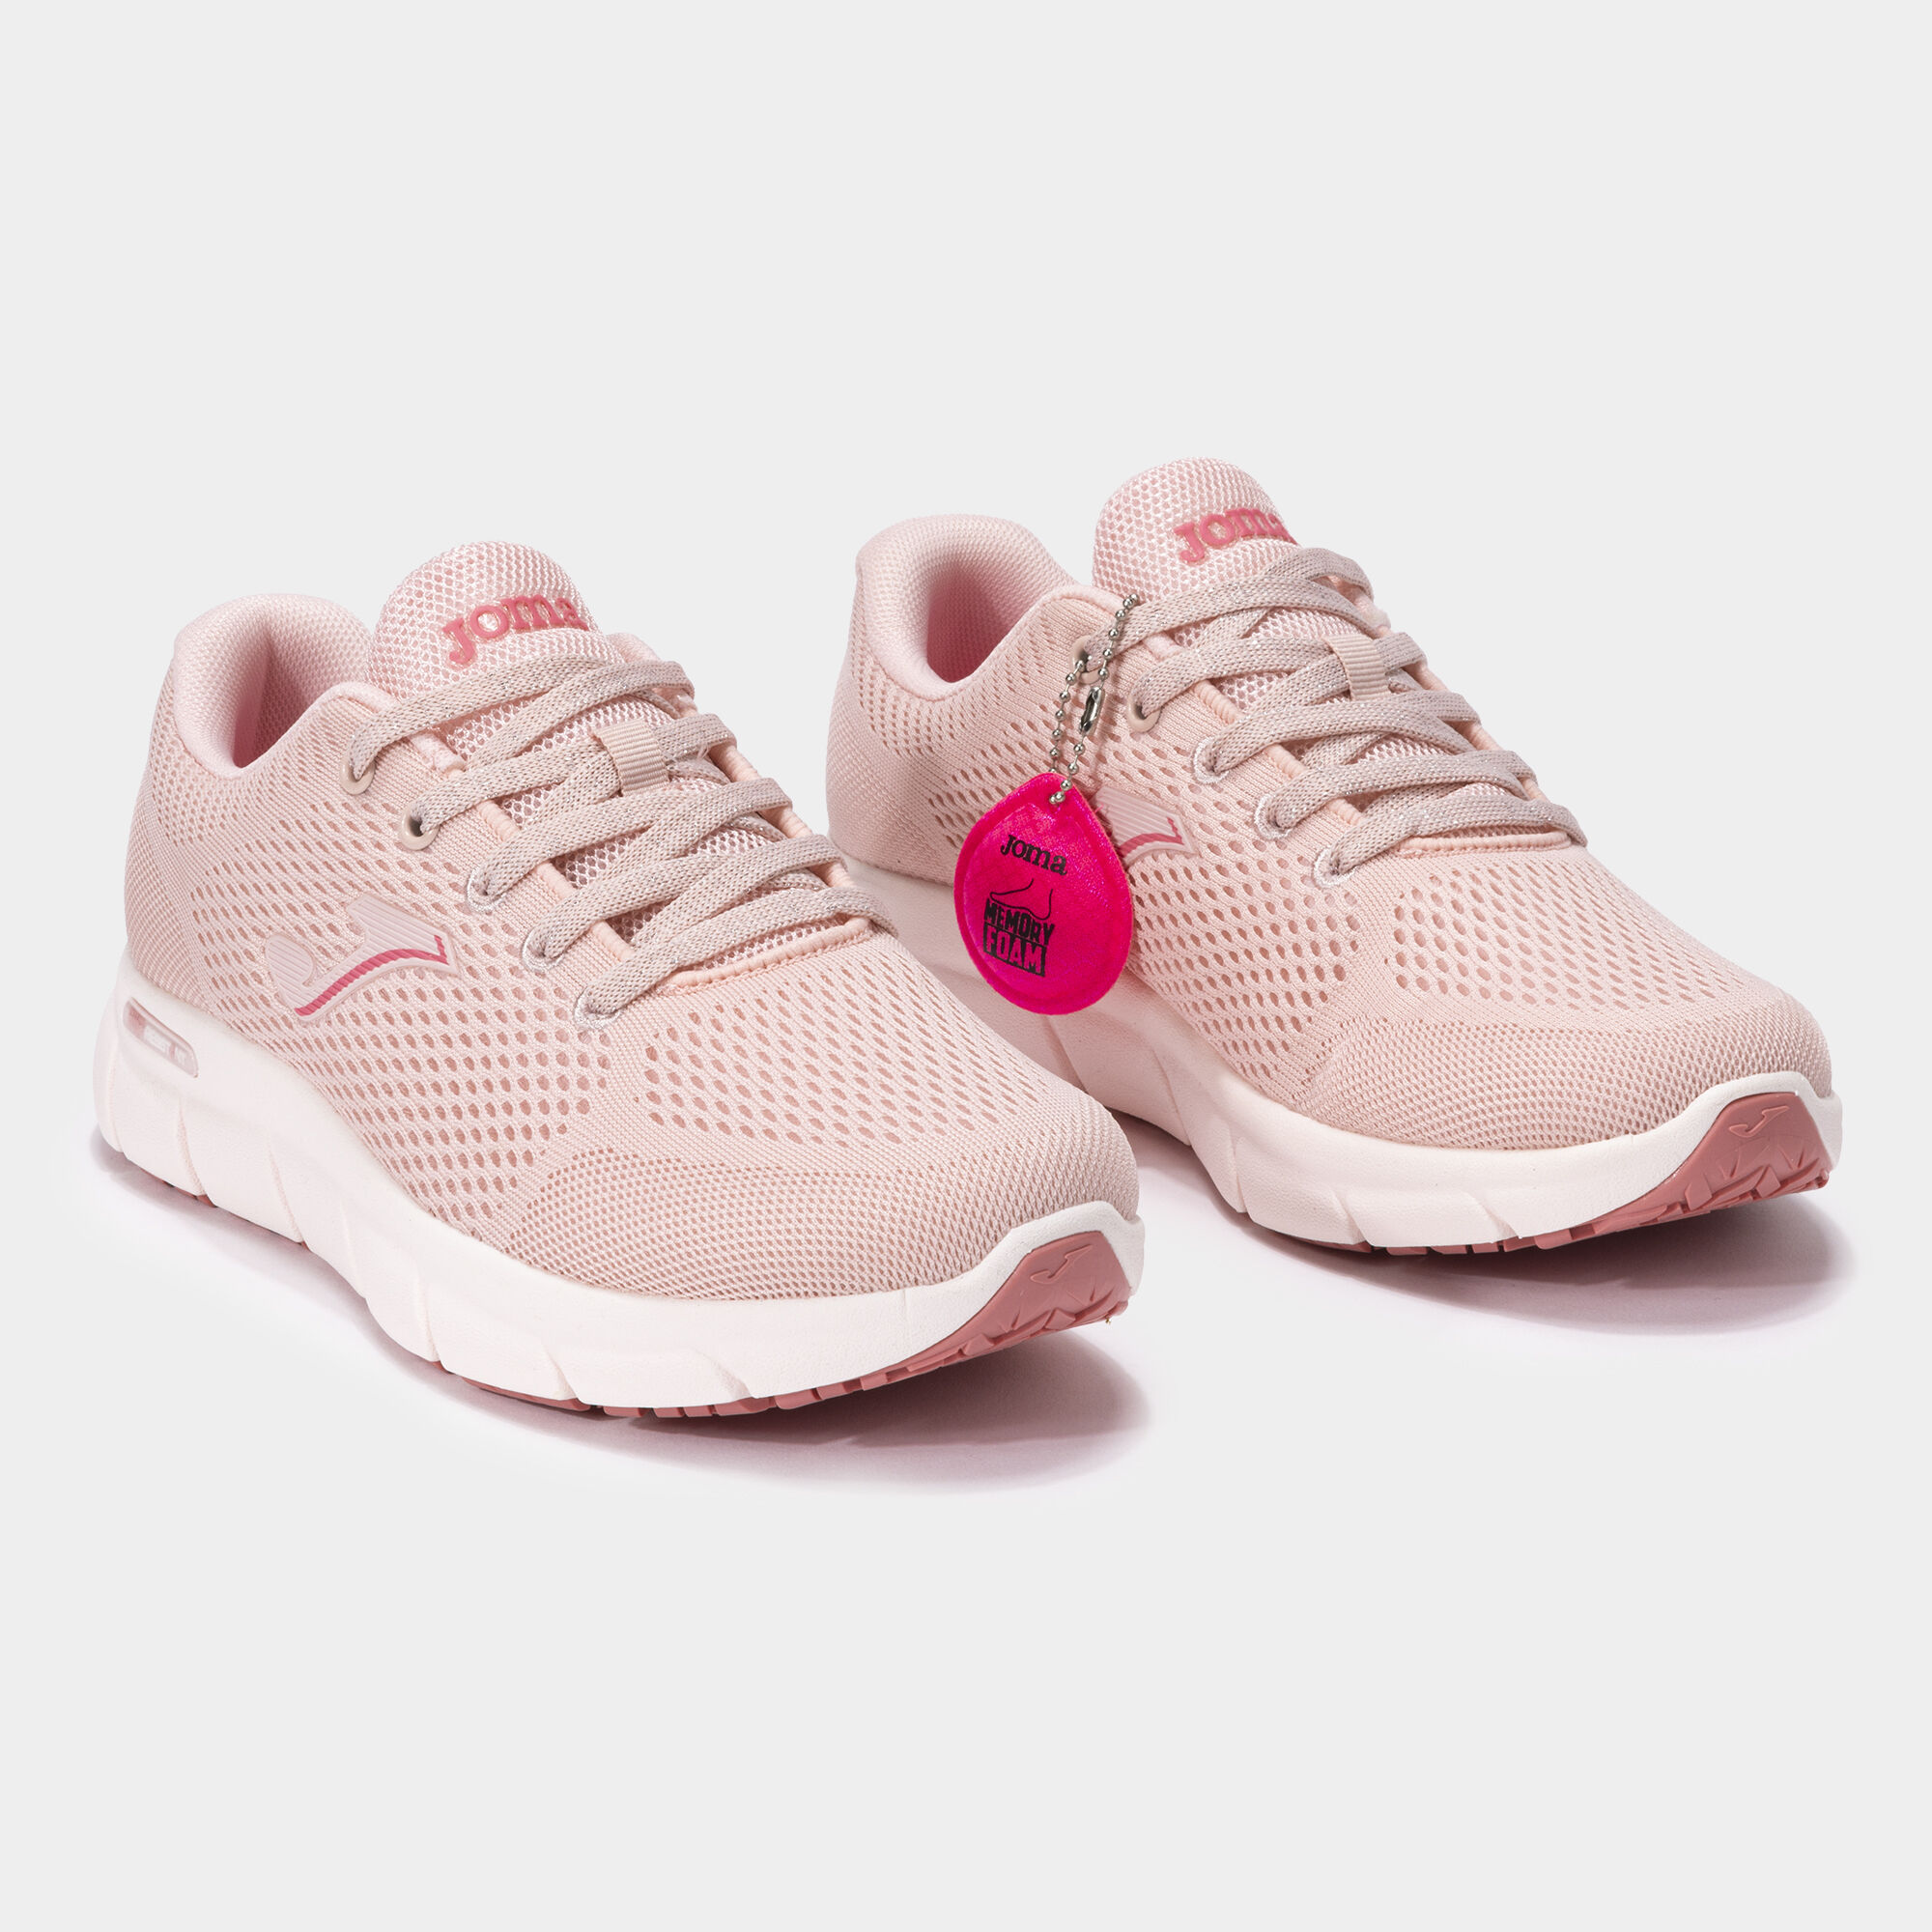 Pantofi sport casual Zen Lady 24 damă roz deschis